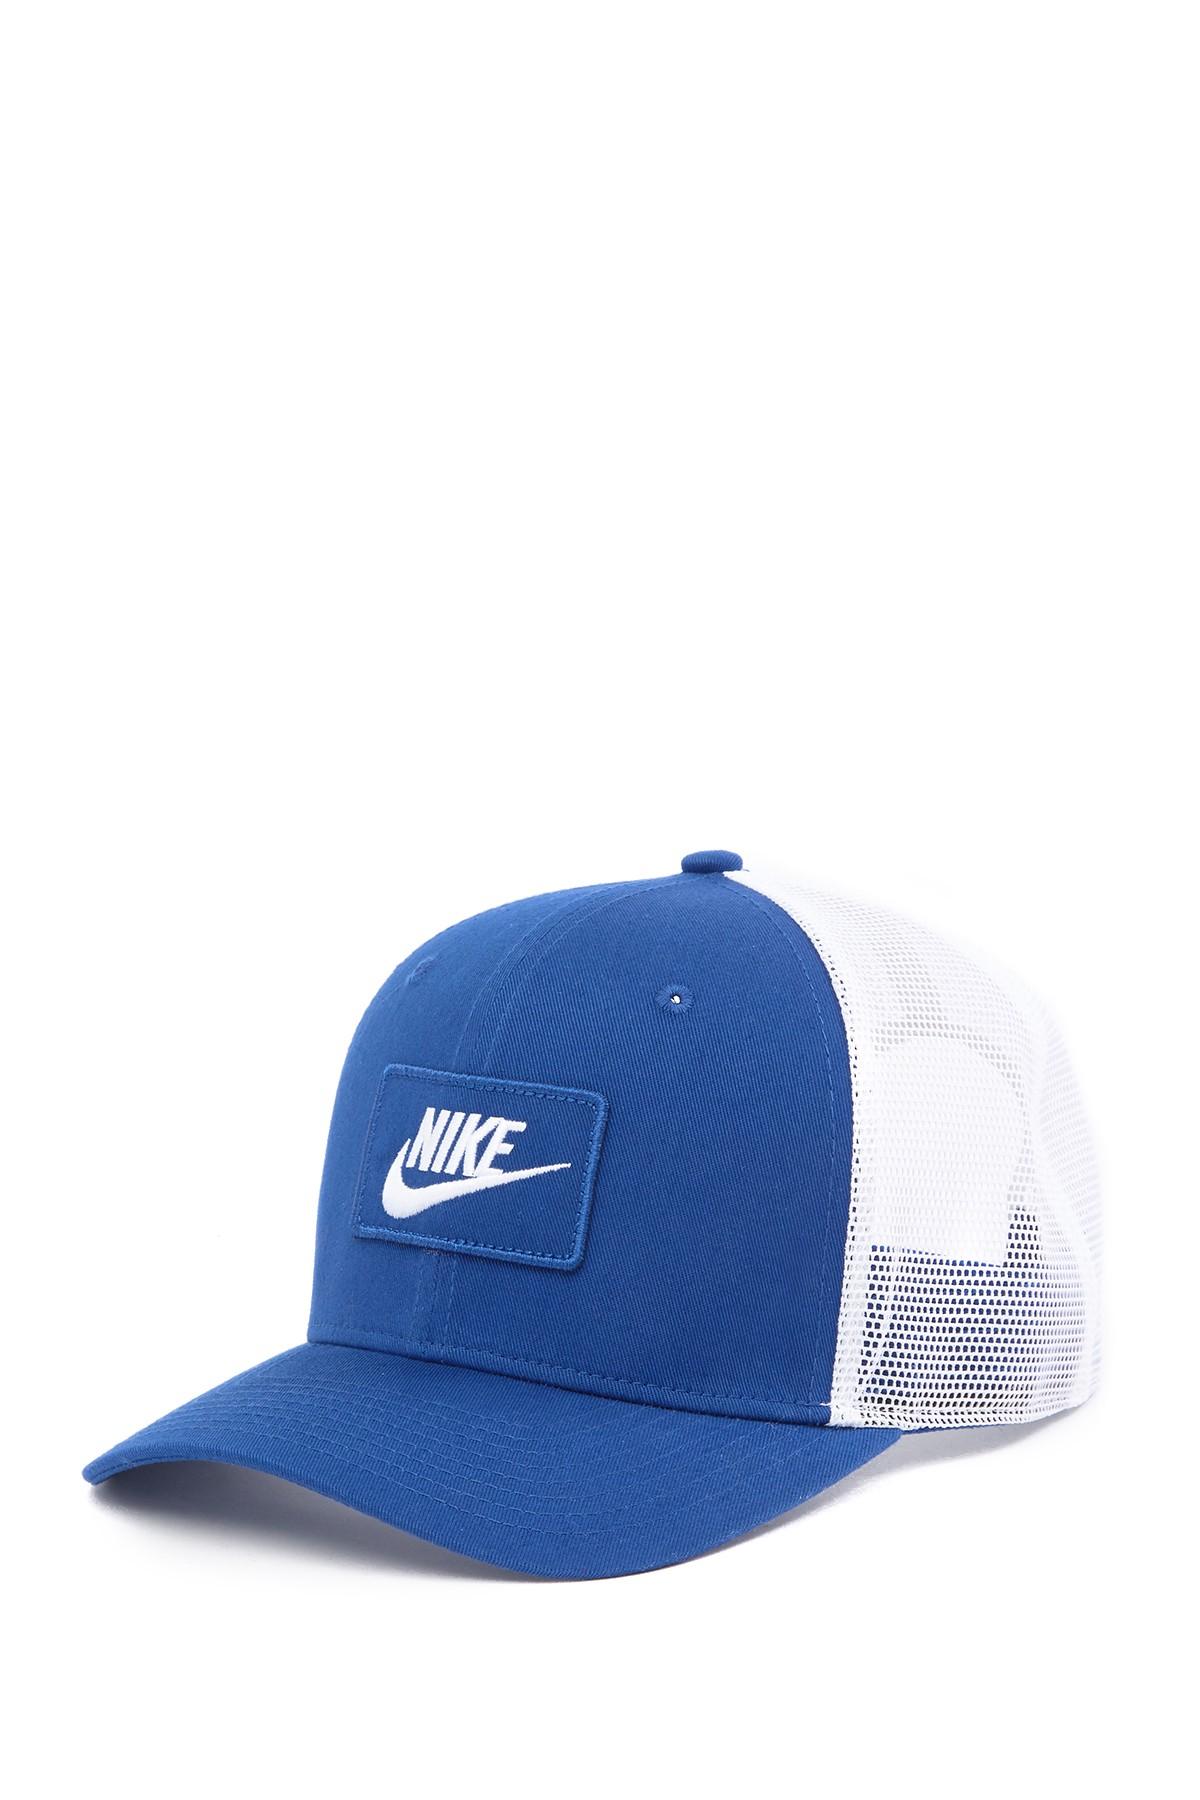 Nike Cotton Nsw Classic99 Trucker Hat in Blue for Men - Lyst